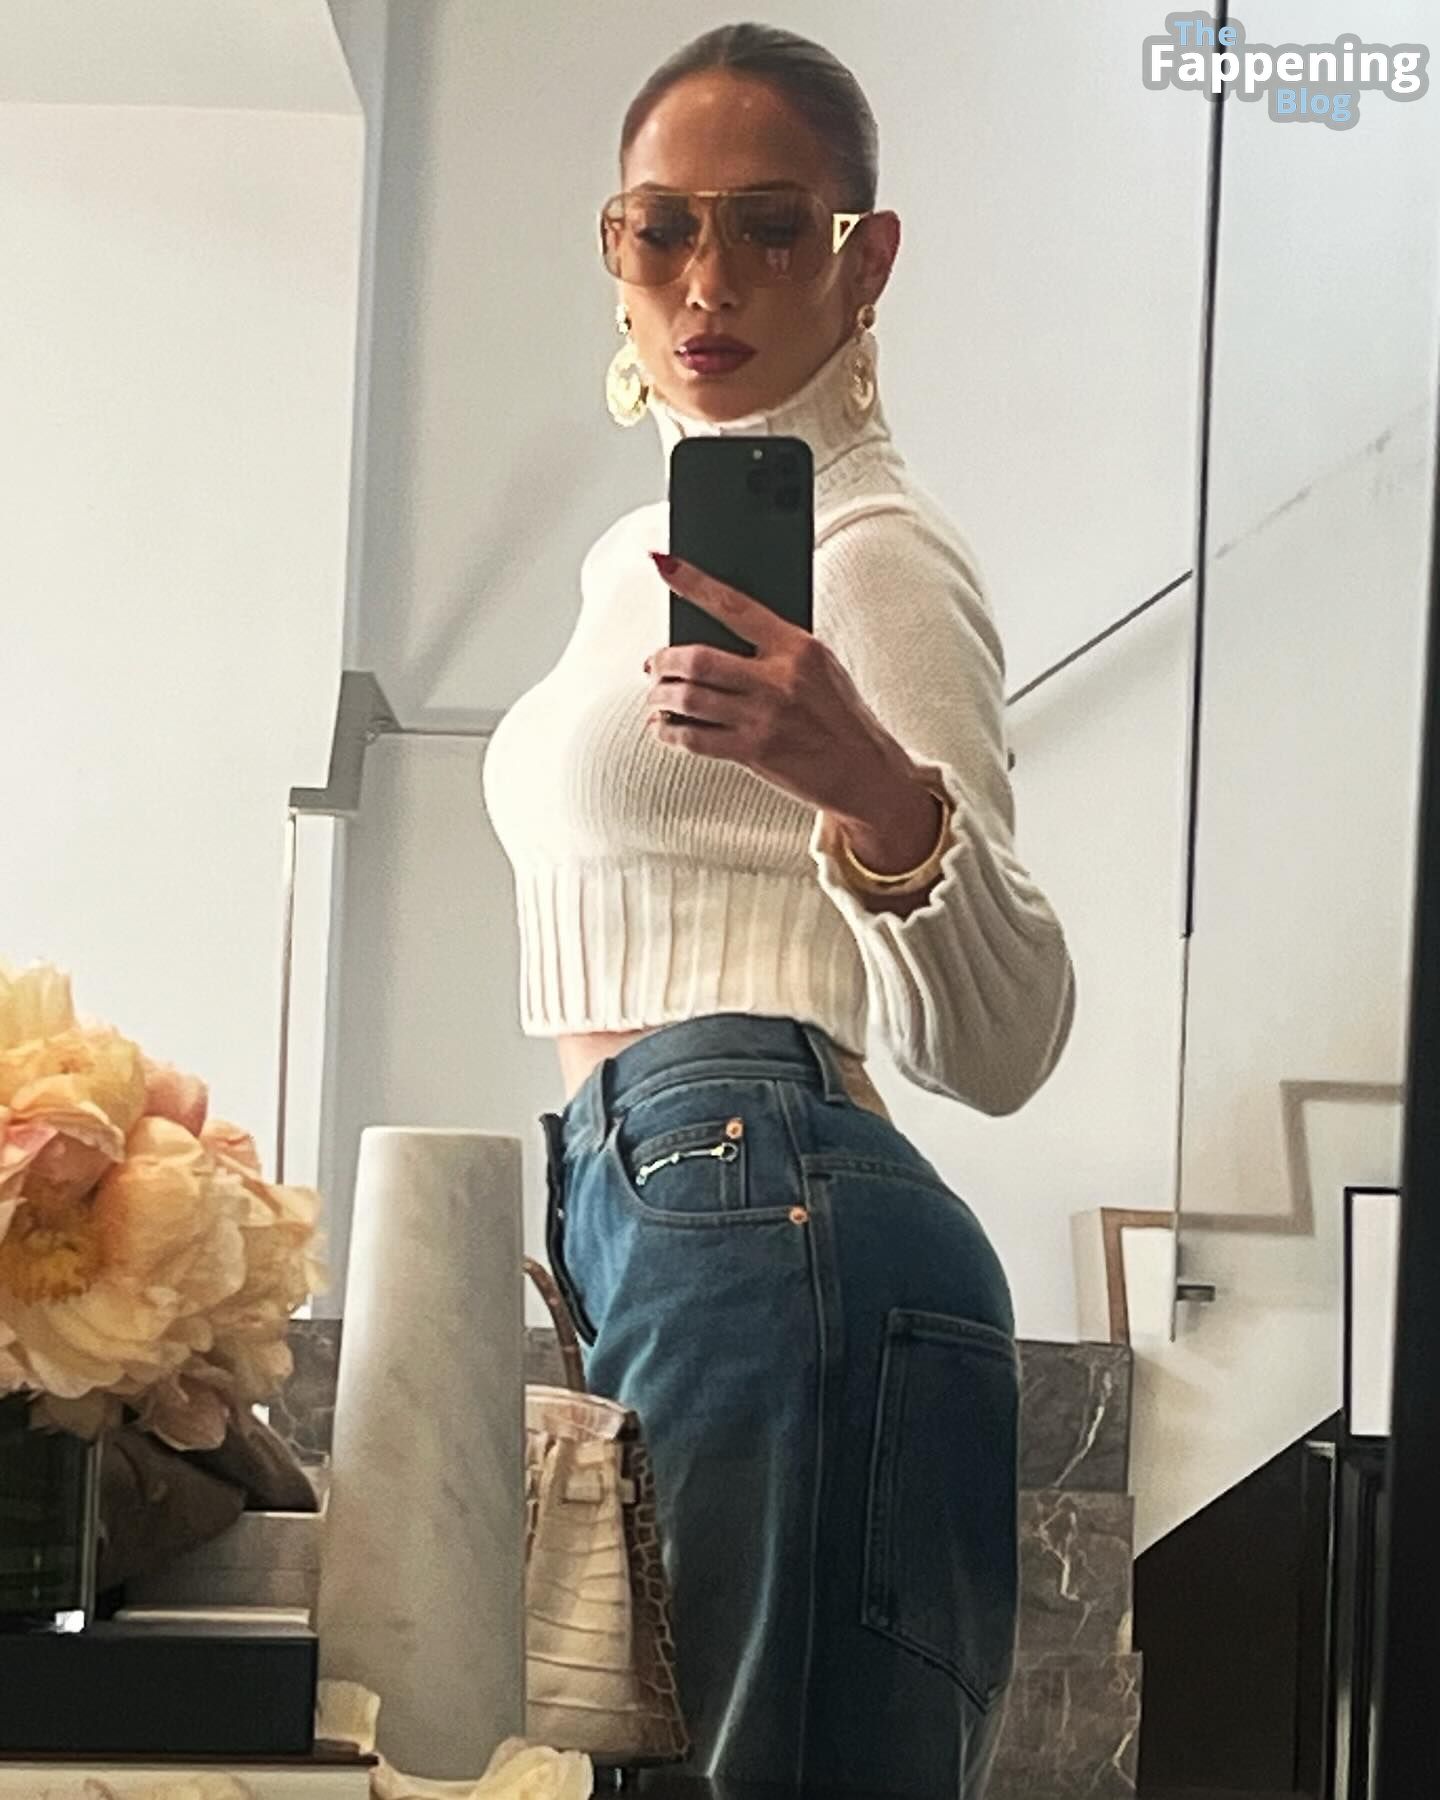 Jennifer Lopez Hot (17 Photos)